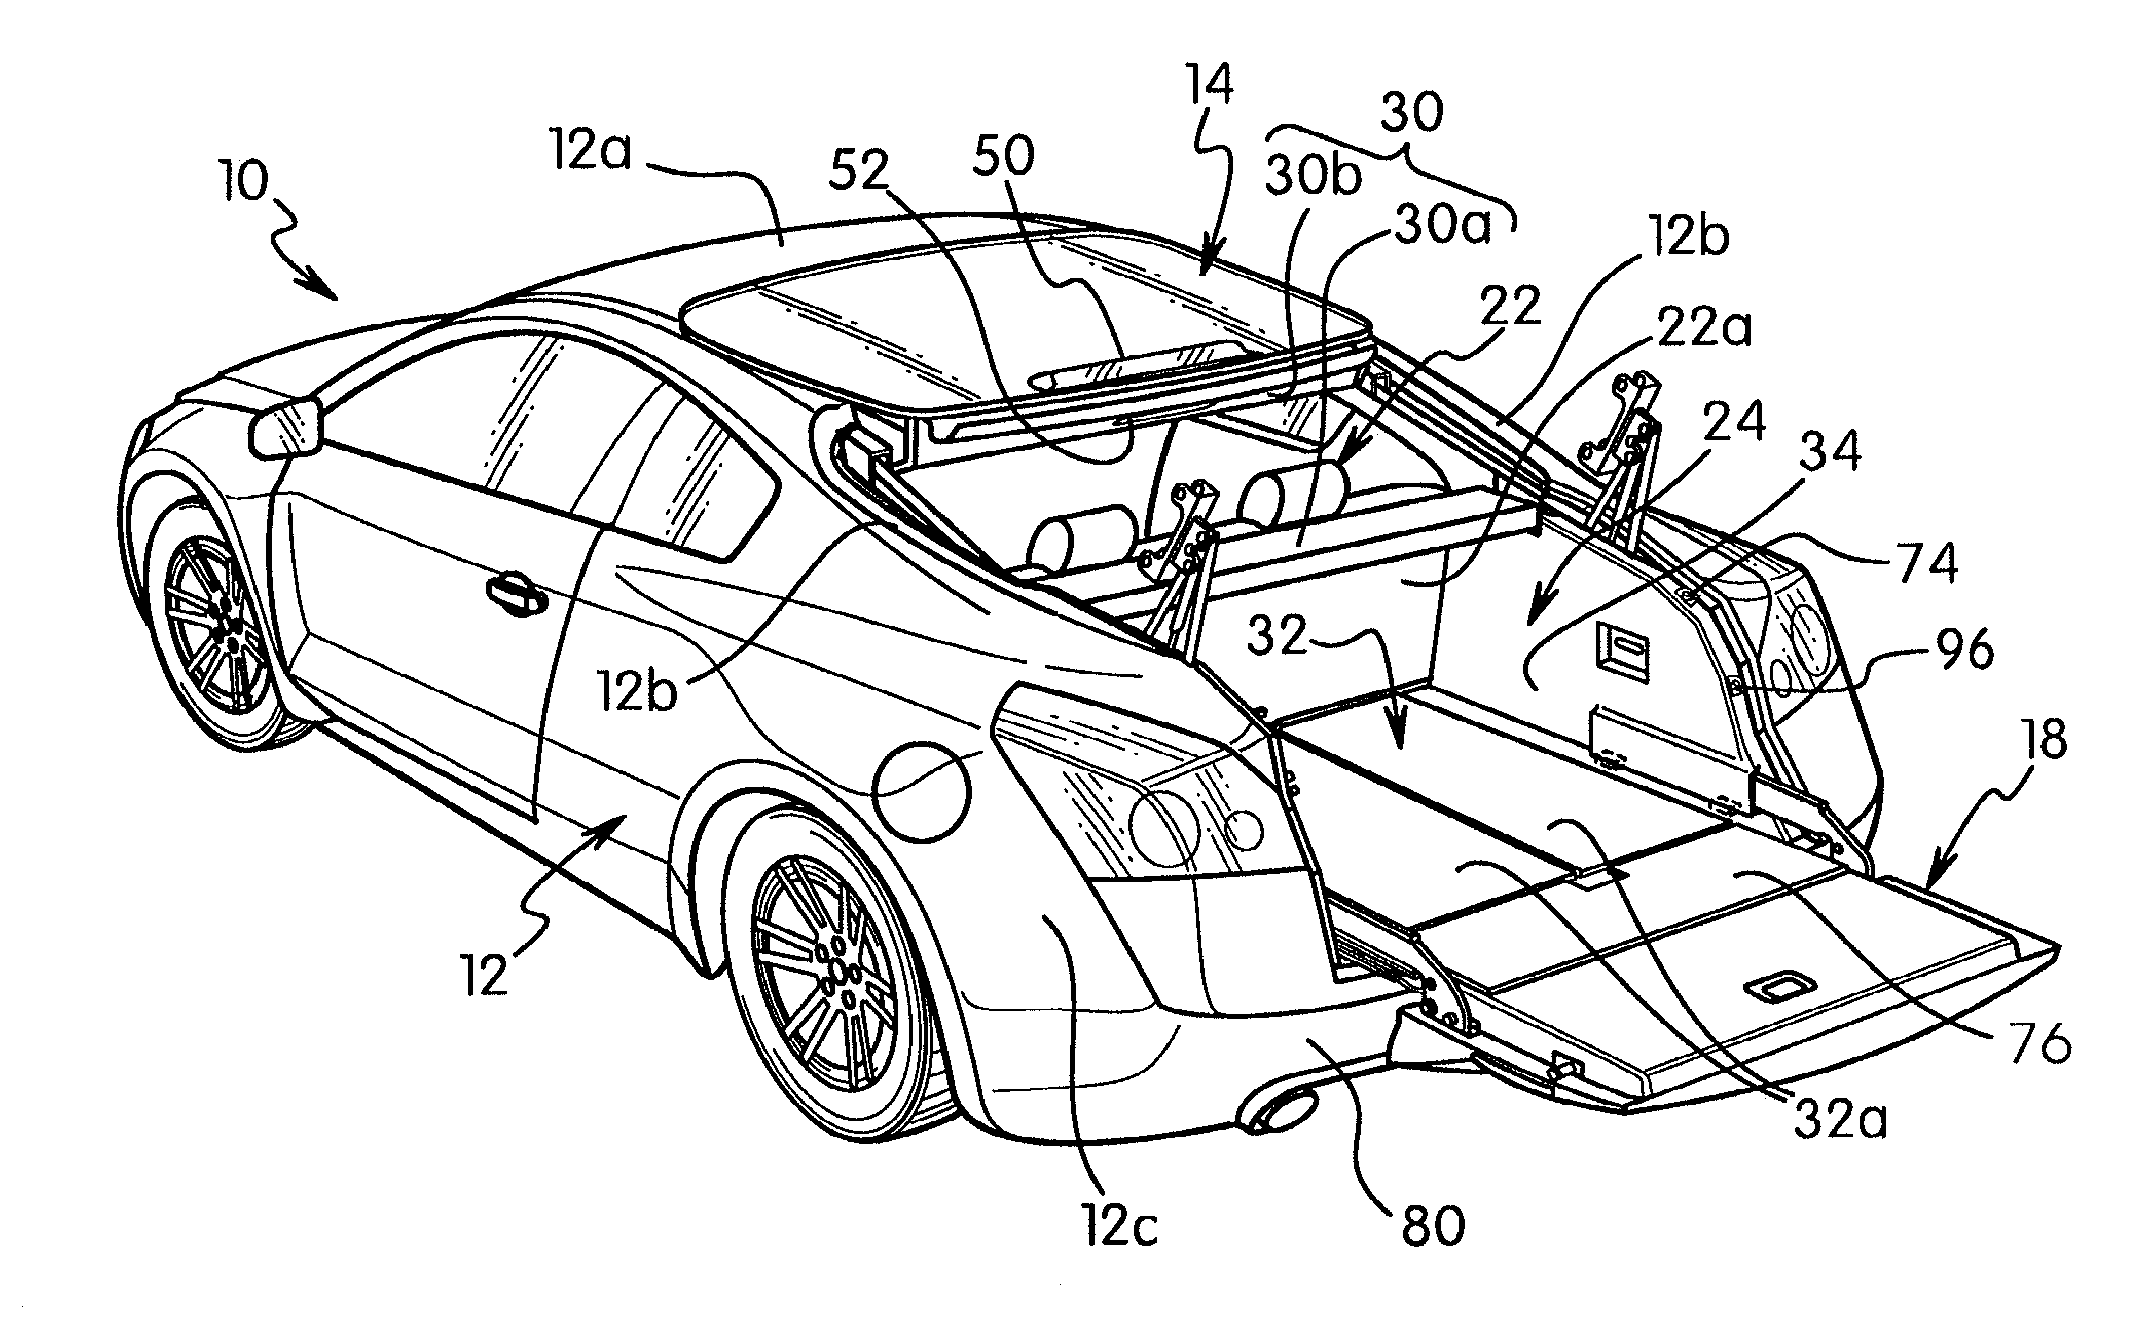 Passenger vehicle trunk structure